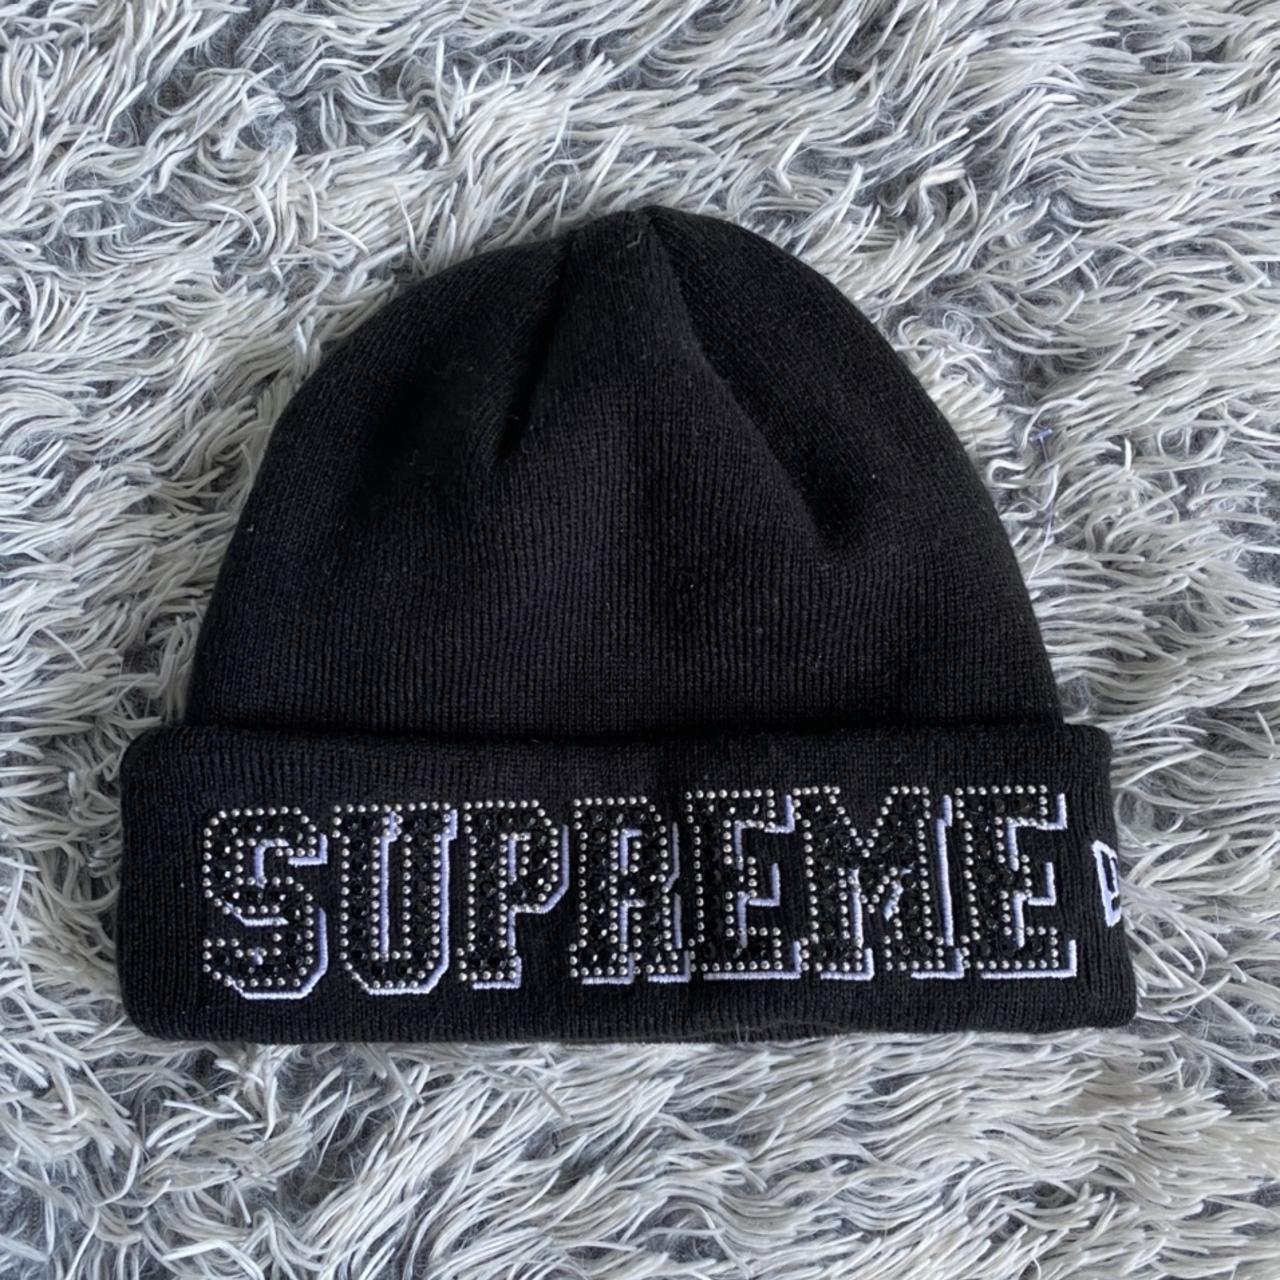 Supreme wool hat - Gem